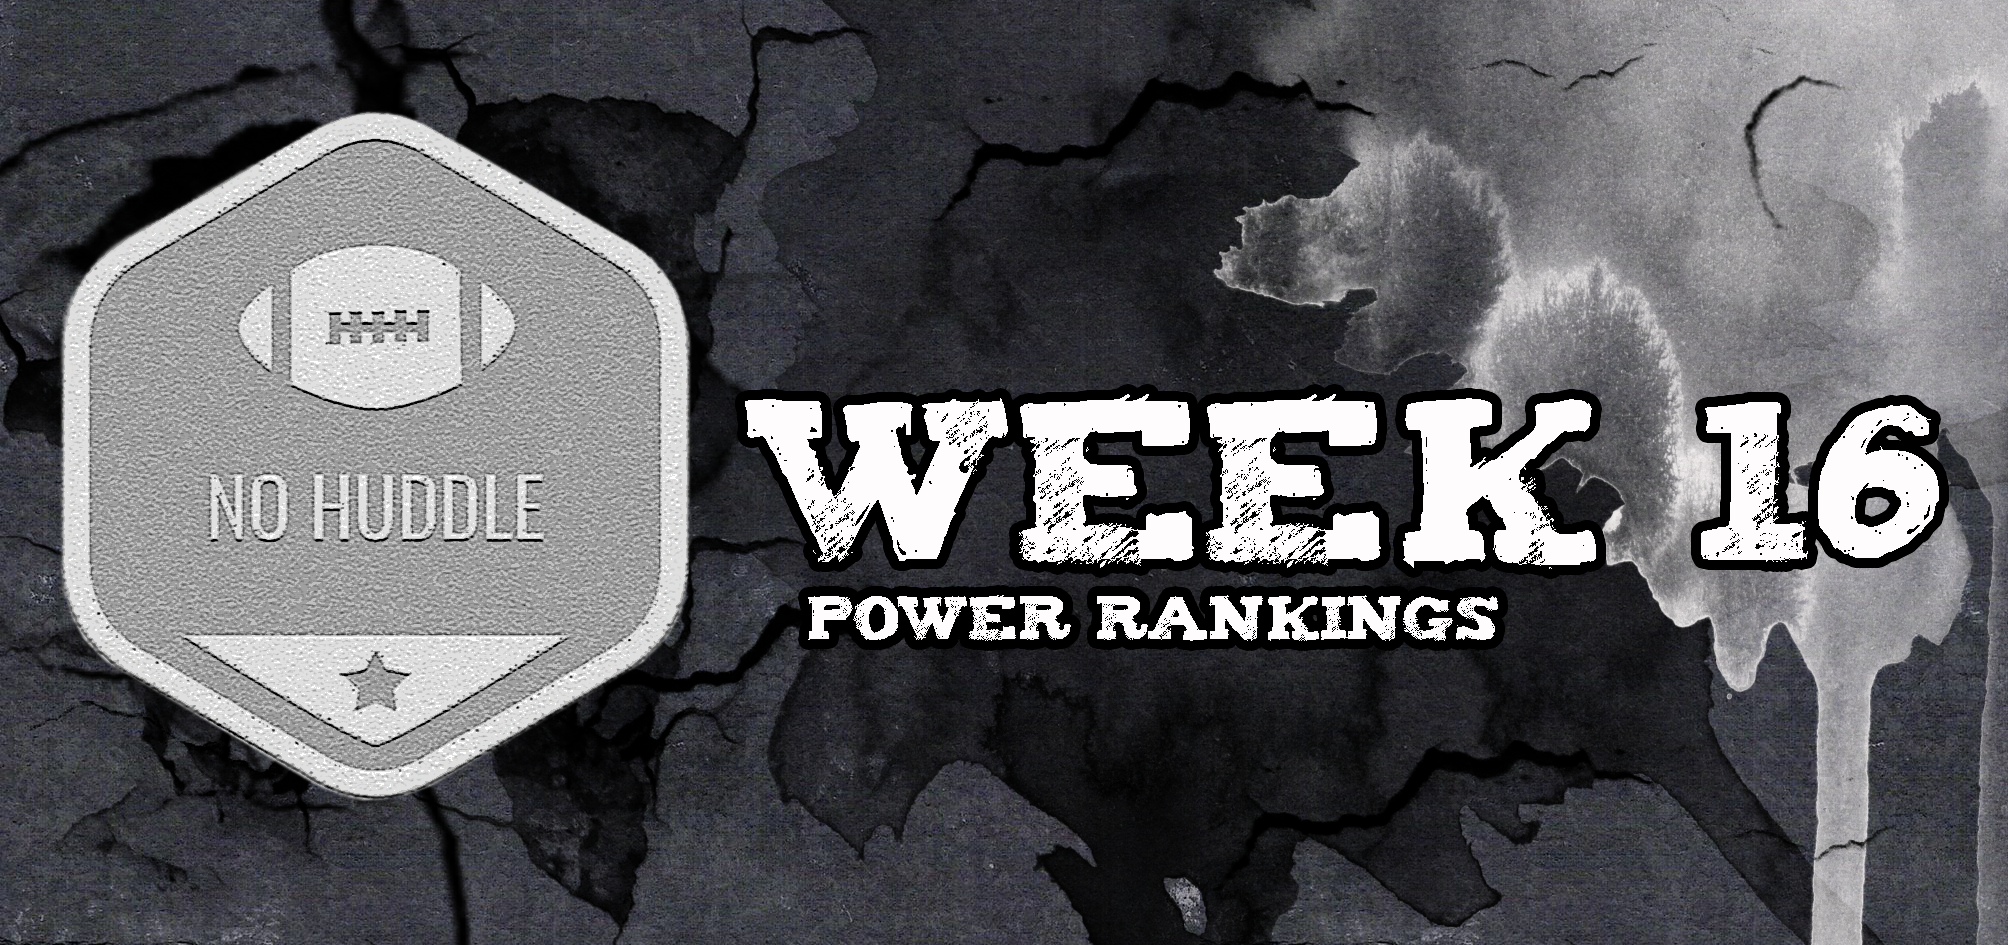 Power Rankings: Semana 16